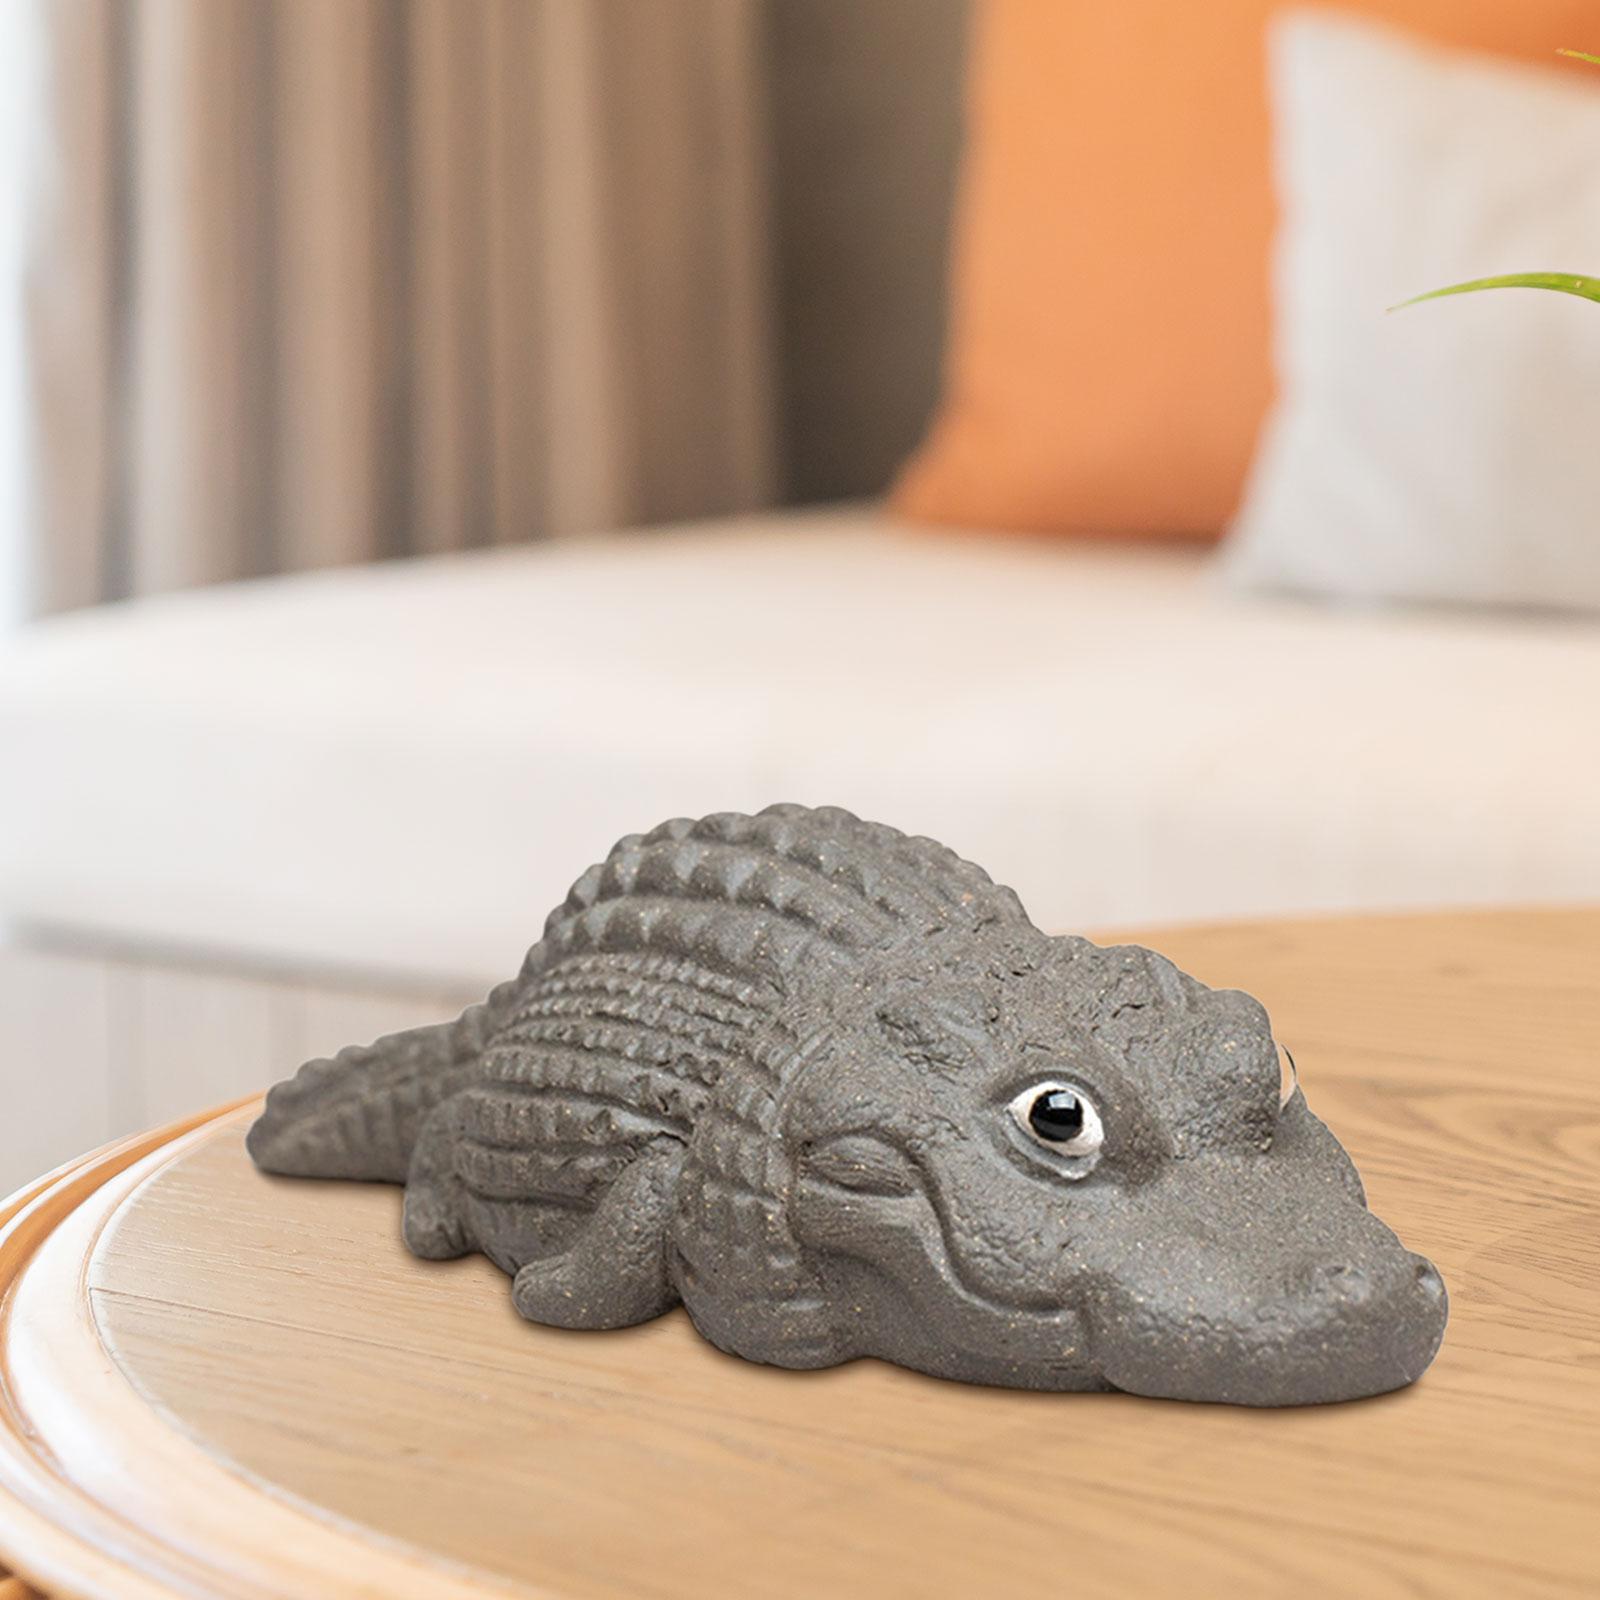 Small Tea Pet Crocodile Statue for Tabletop Living Room Tea Table Decoration Gray